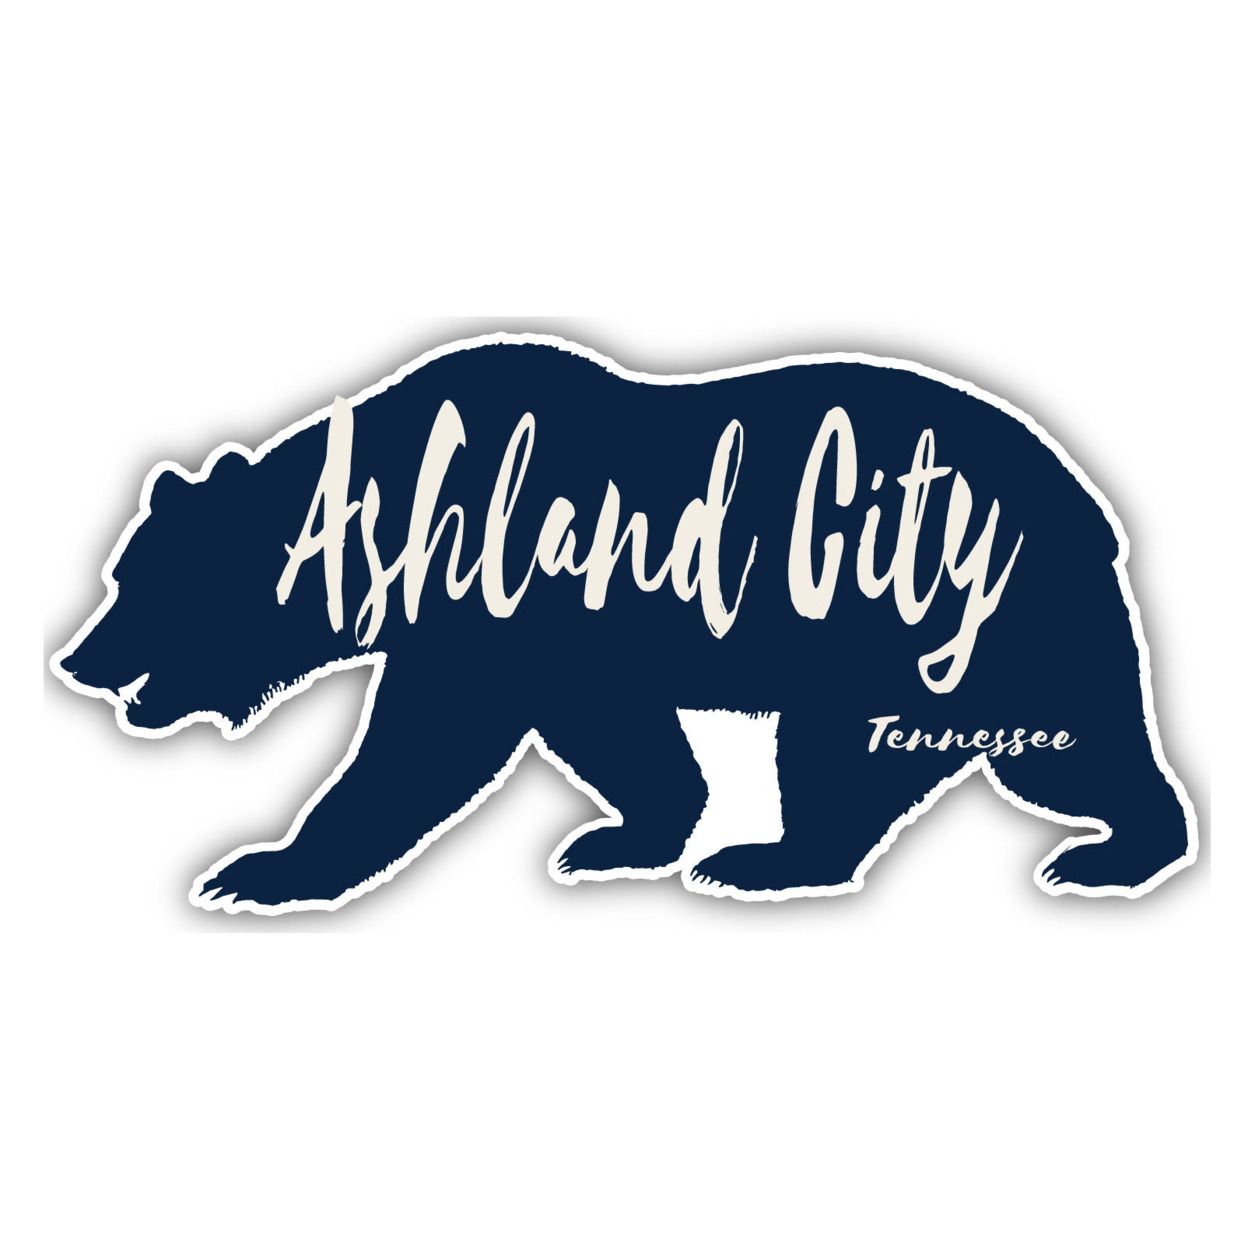 Ashland City Tennessee Souvenir Decorative Stickers (Choose Theme And Size) - Single Unit, 4-Inch, Bear